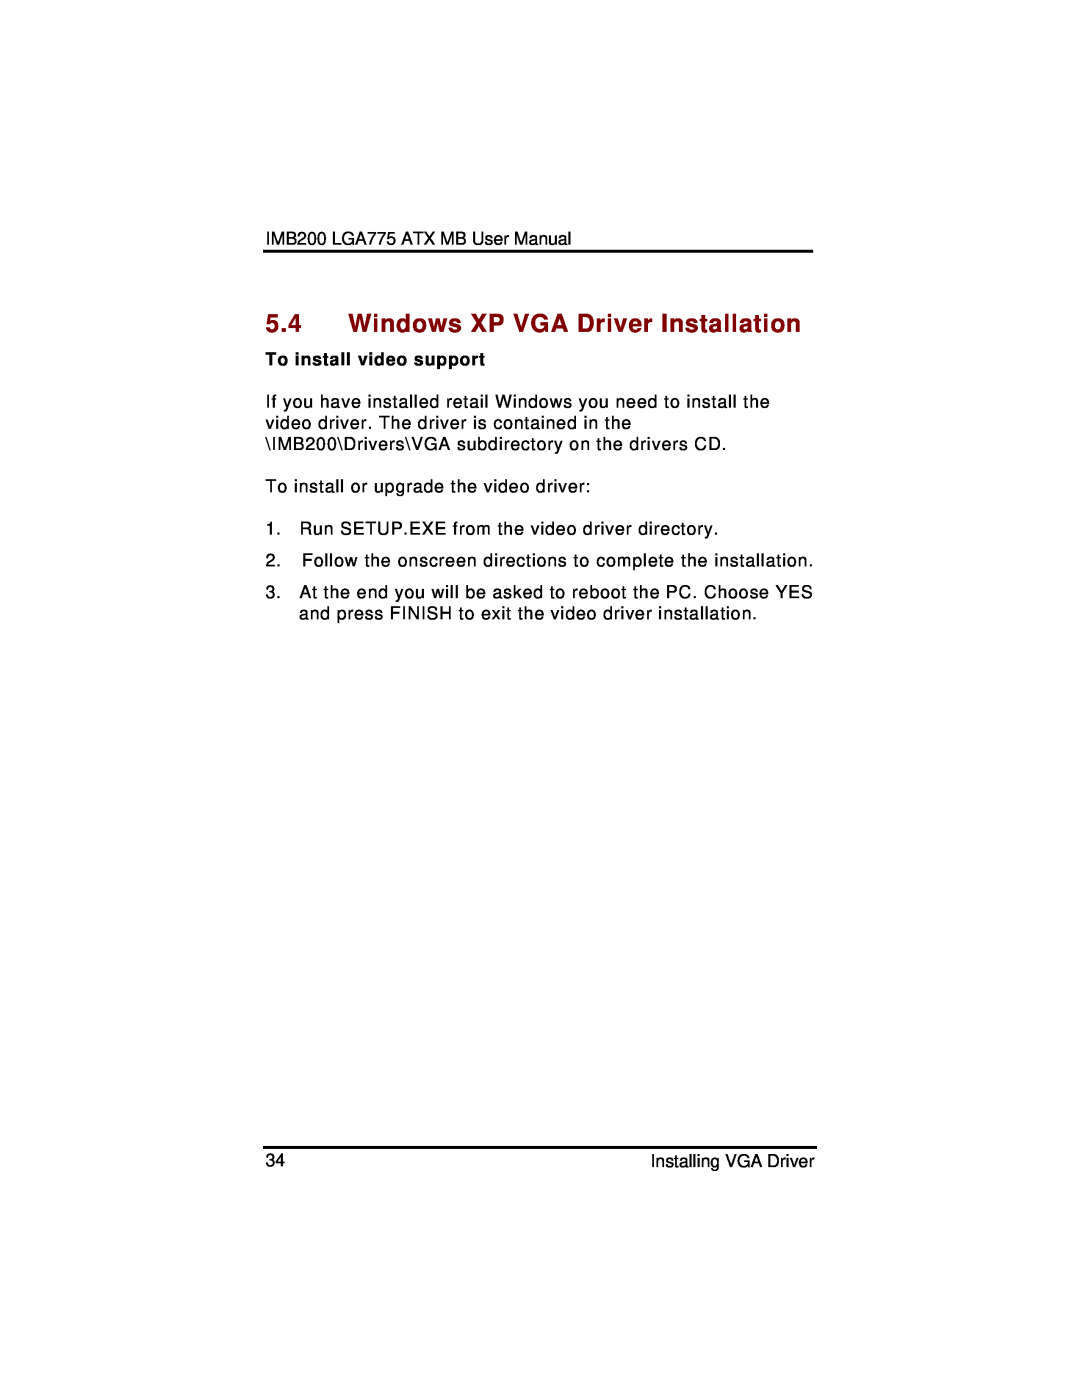 Intel IMB200VGE user manual Windows XP VGA Driver Installation, To install video support 